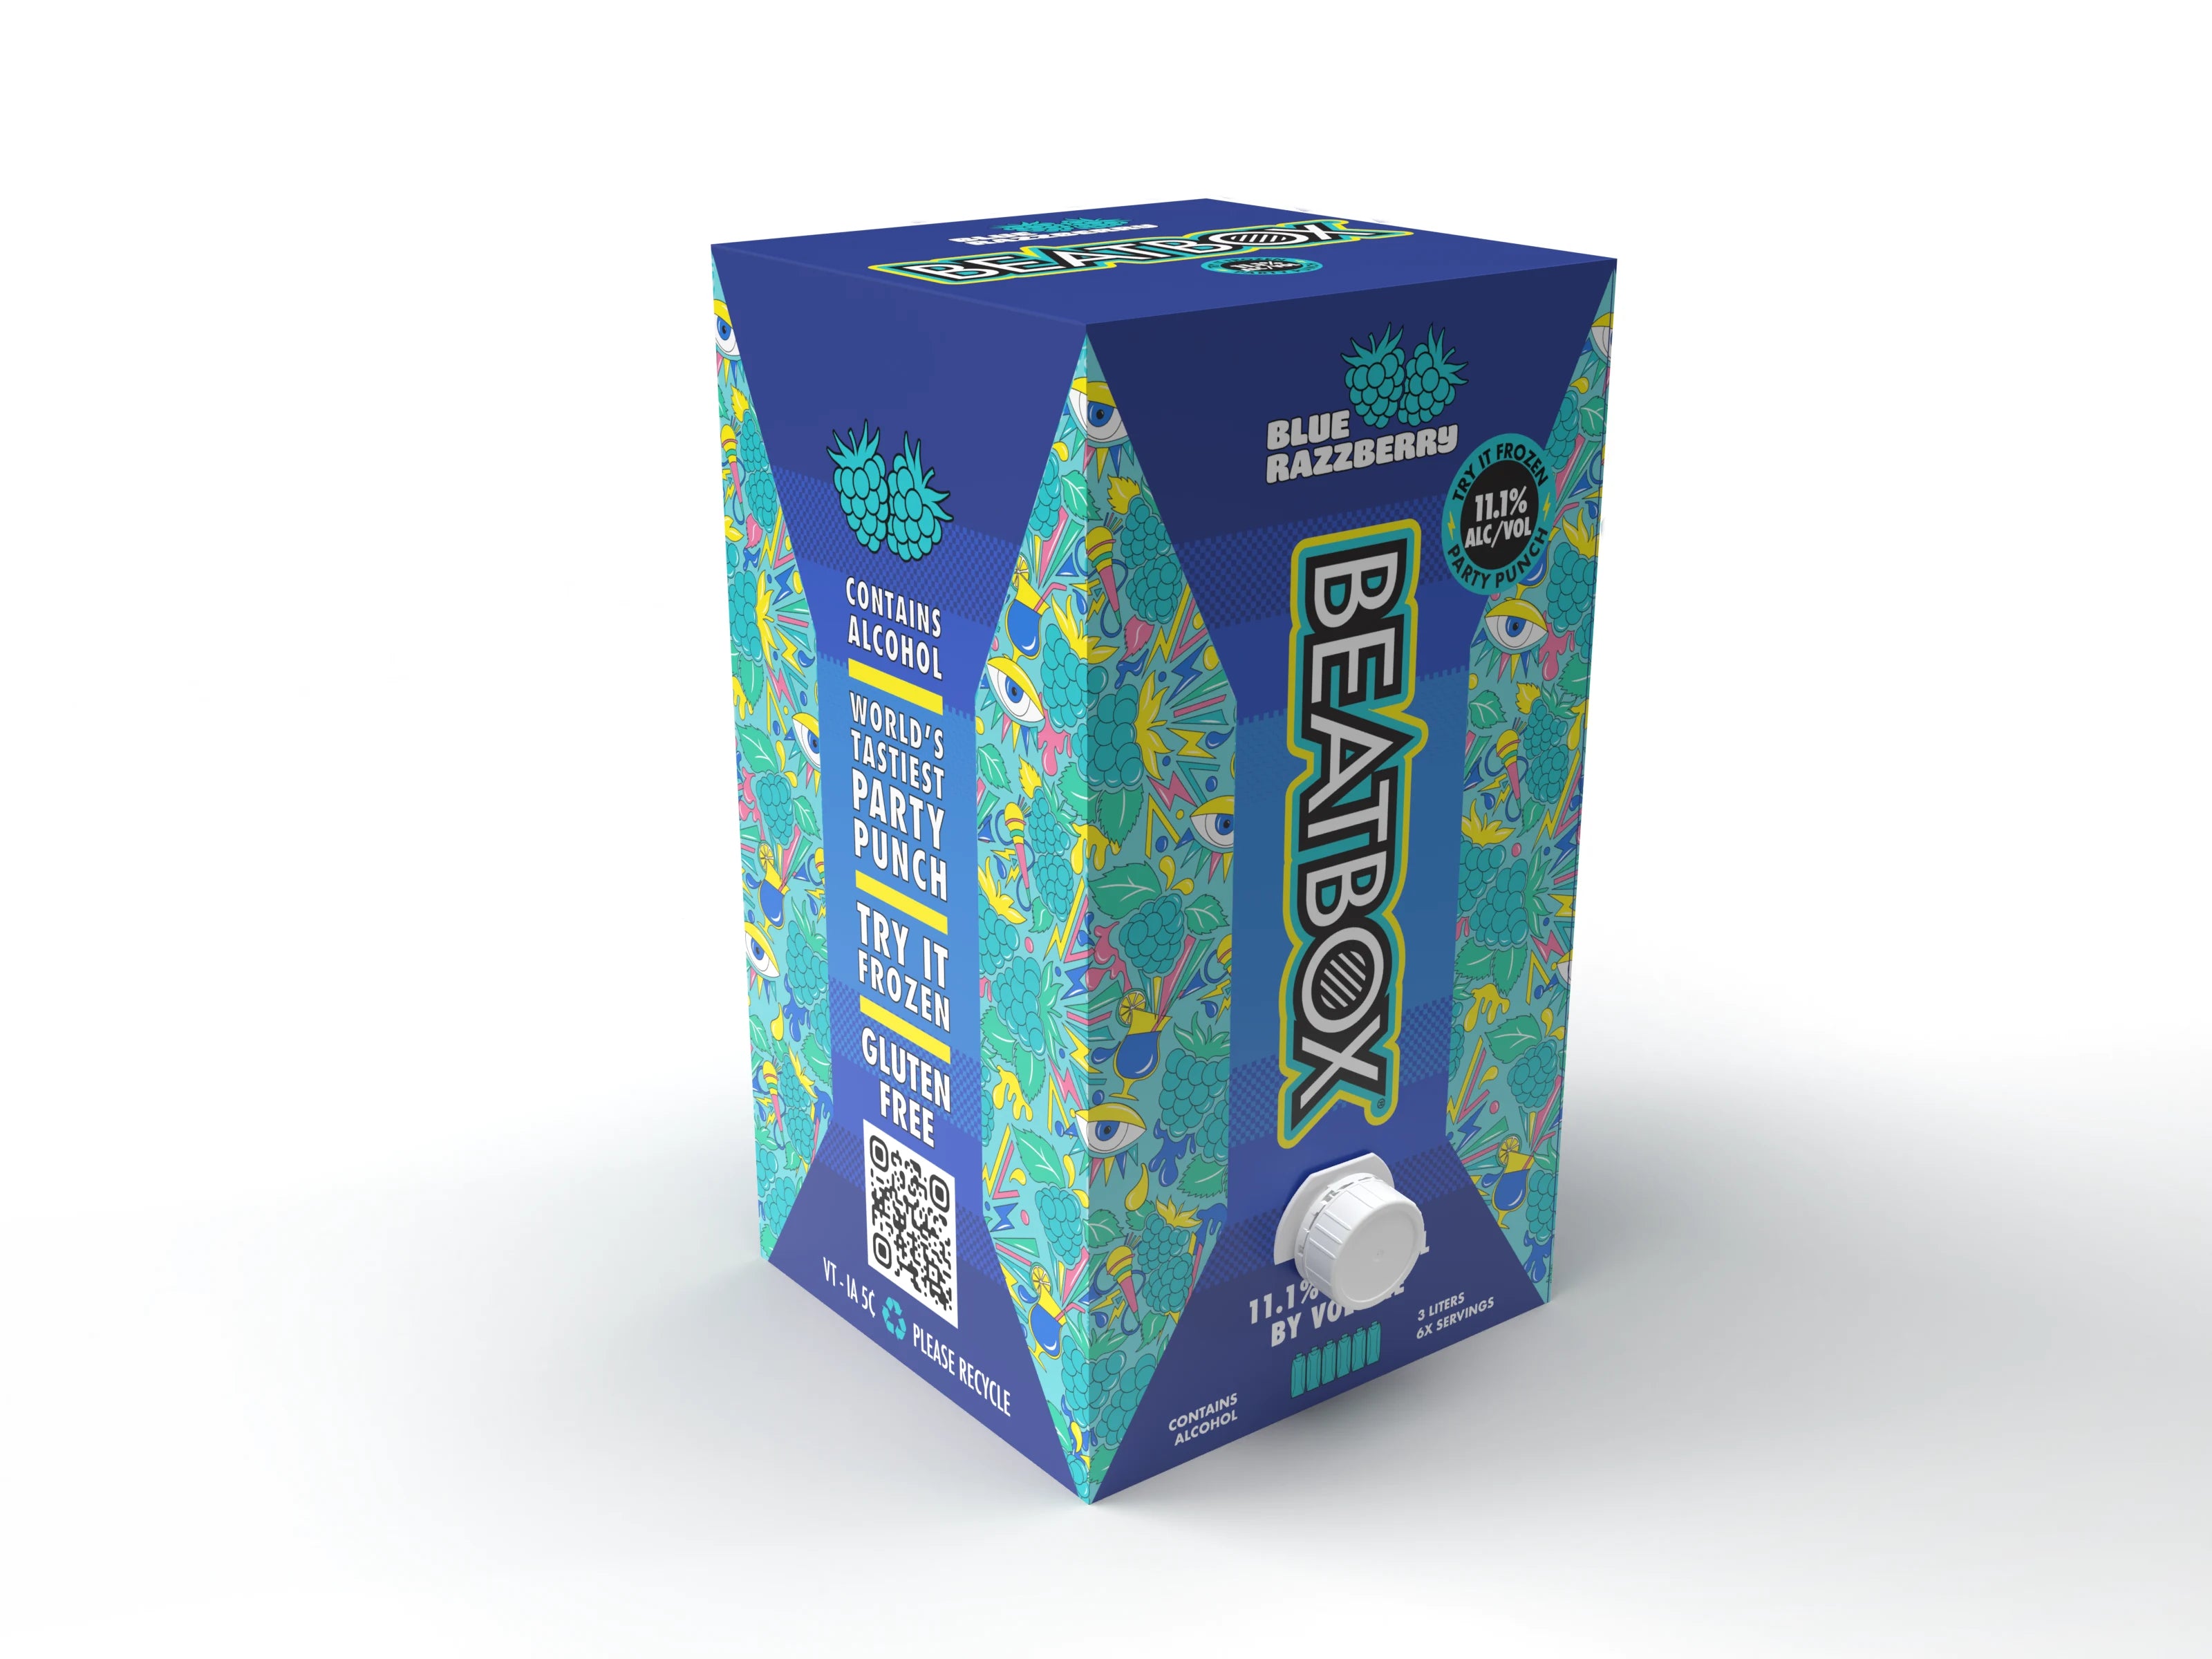 Beatbox Blue Razzberry 3L Bag in a Box